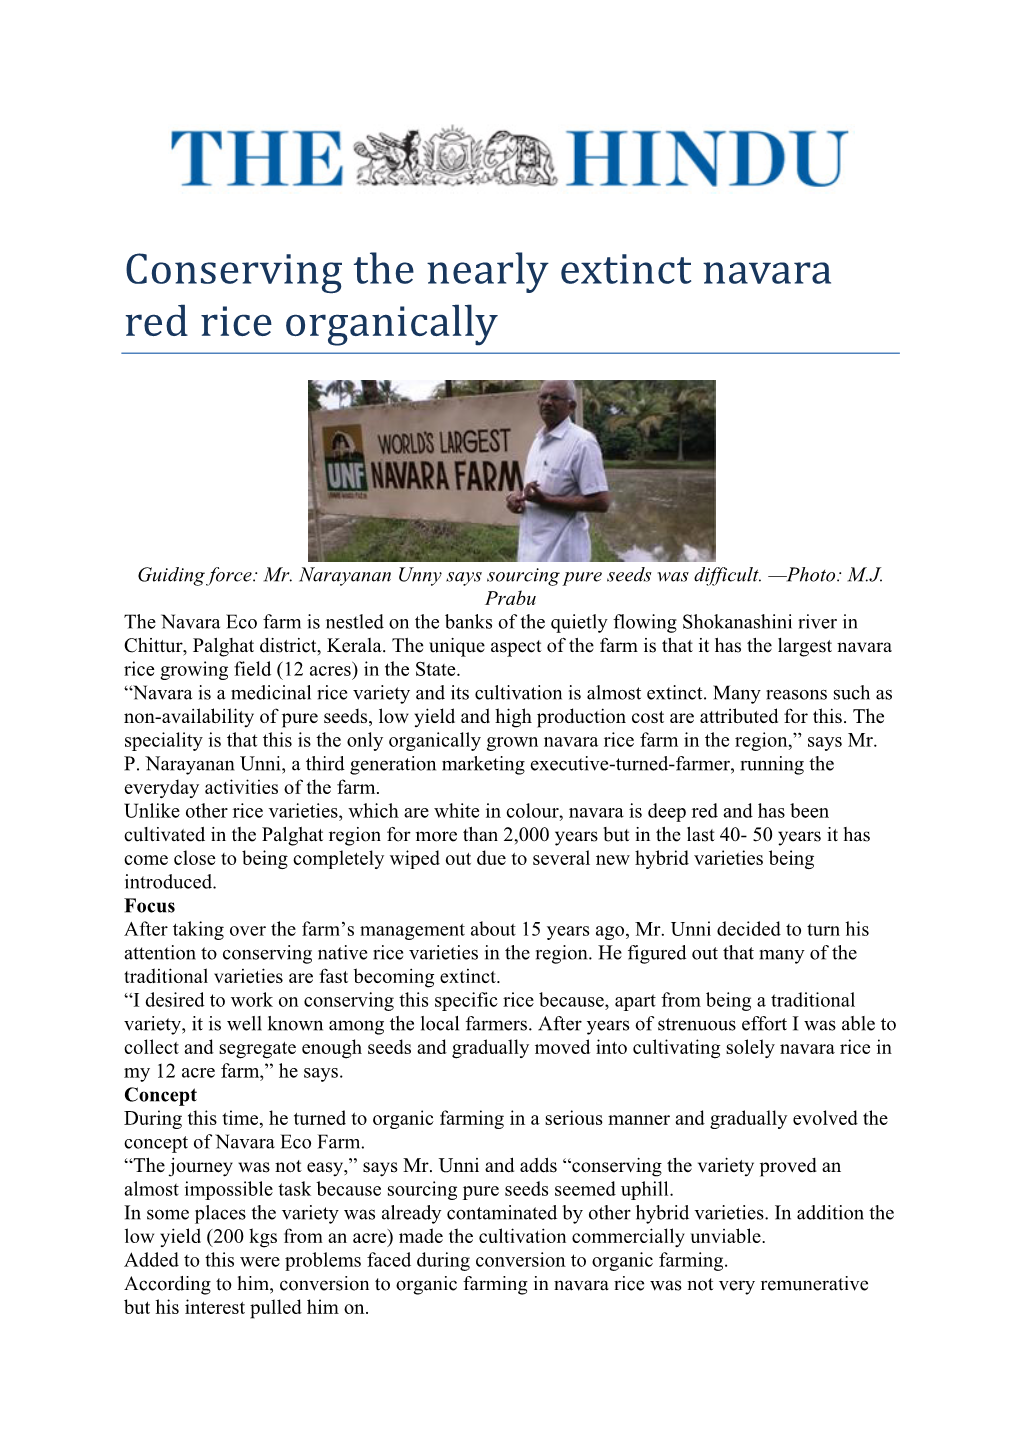 Conserving the Nearly Extinct Navara Red Rice Organically